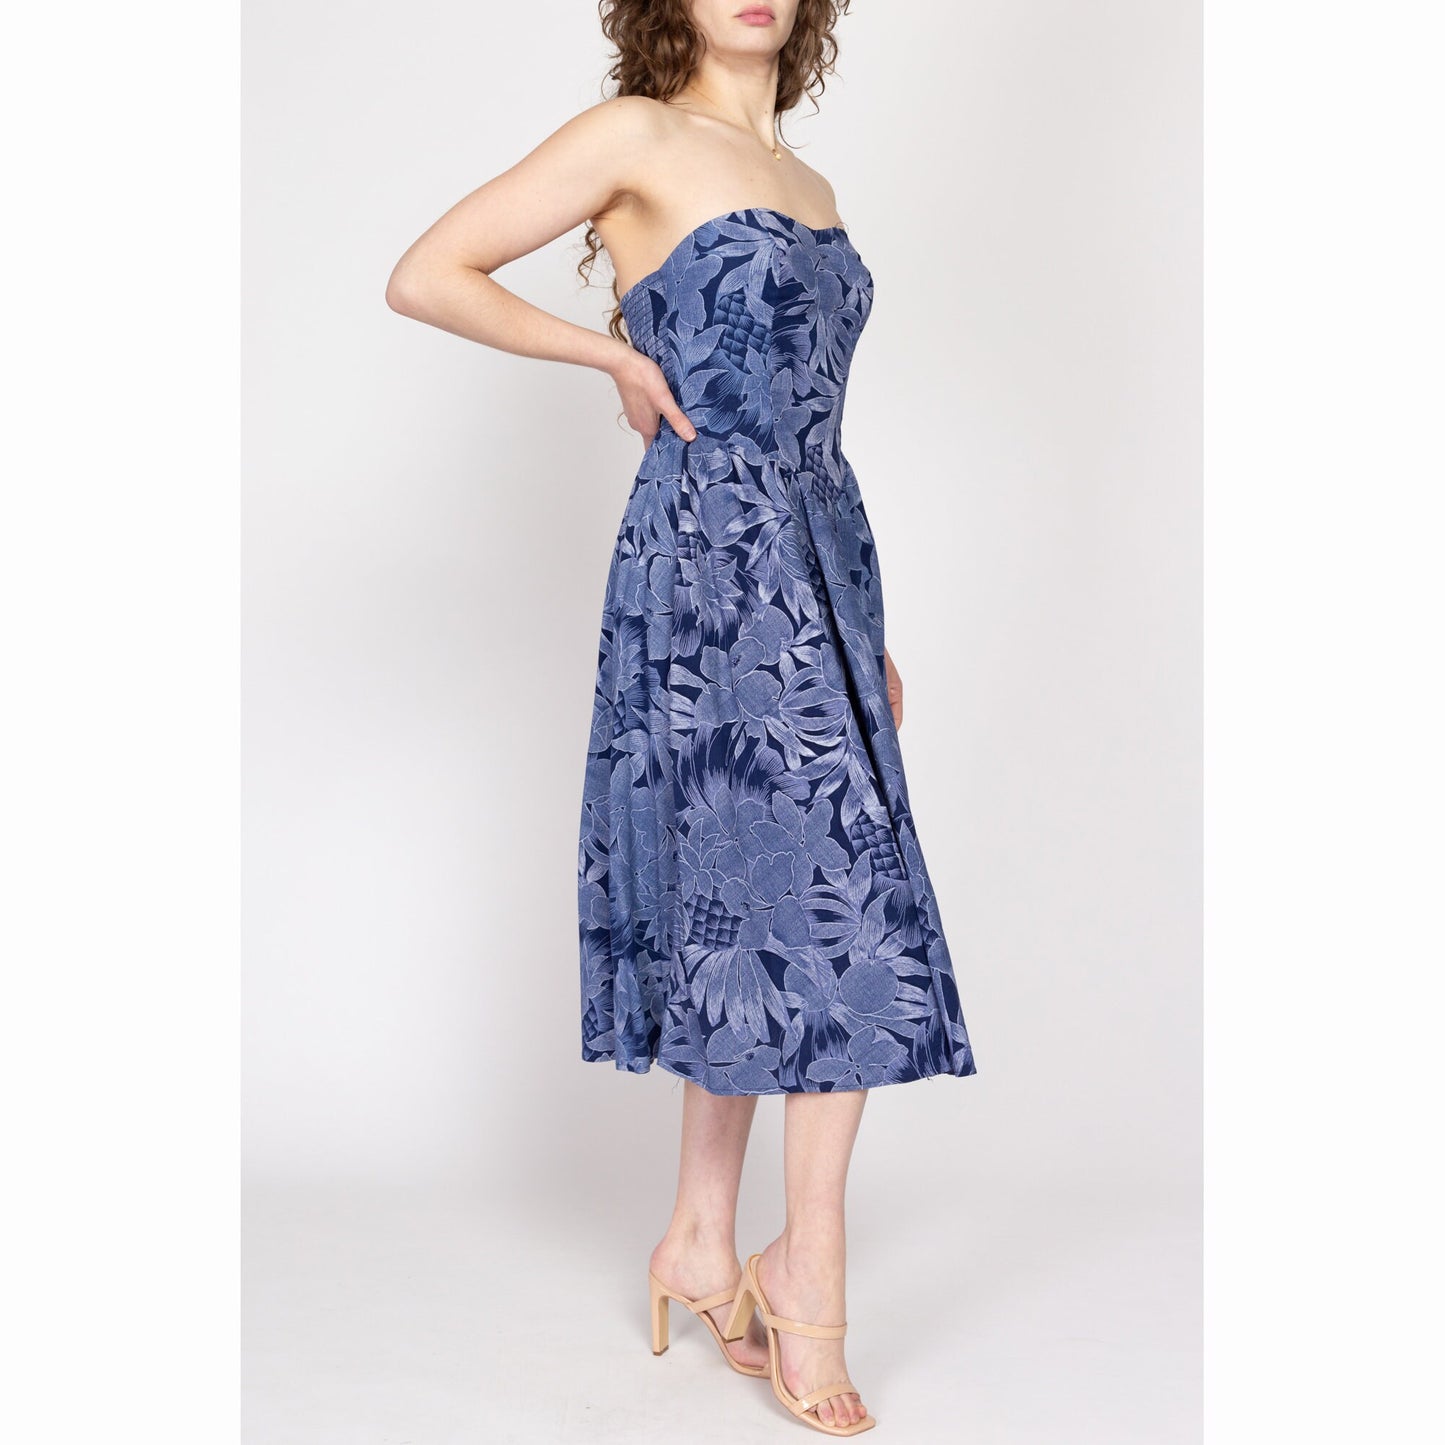 Medium 80s Blue Tropical Floral Strapless Fit & Flare Dress | Vintage Cotton Retro Midi Sundress